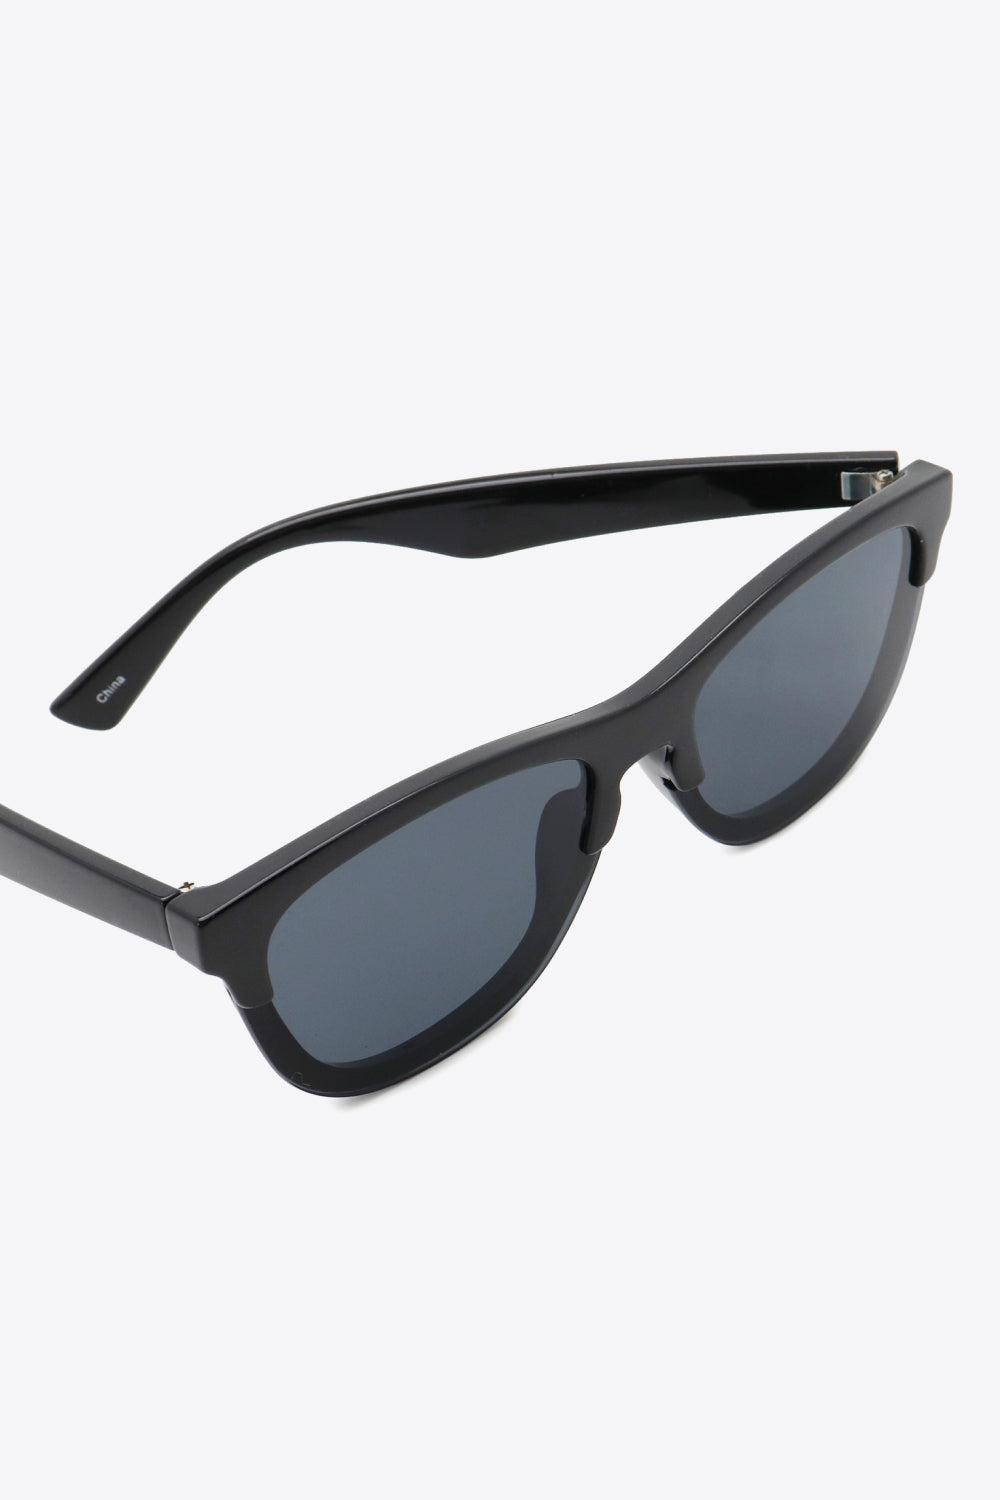 UV400 Browline Wayfarer Sunglasses - BEAUTY COSMOTICS SHOP